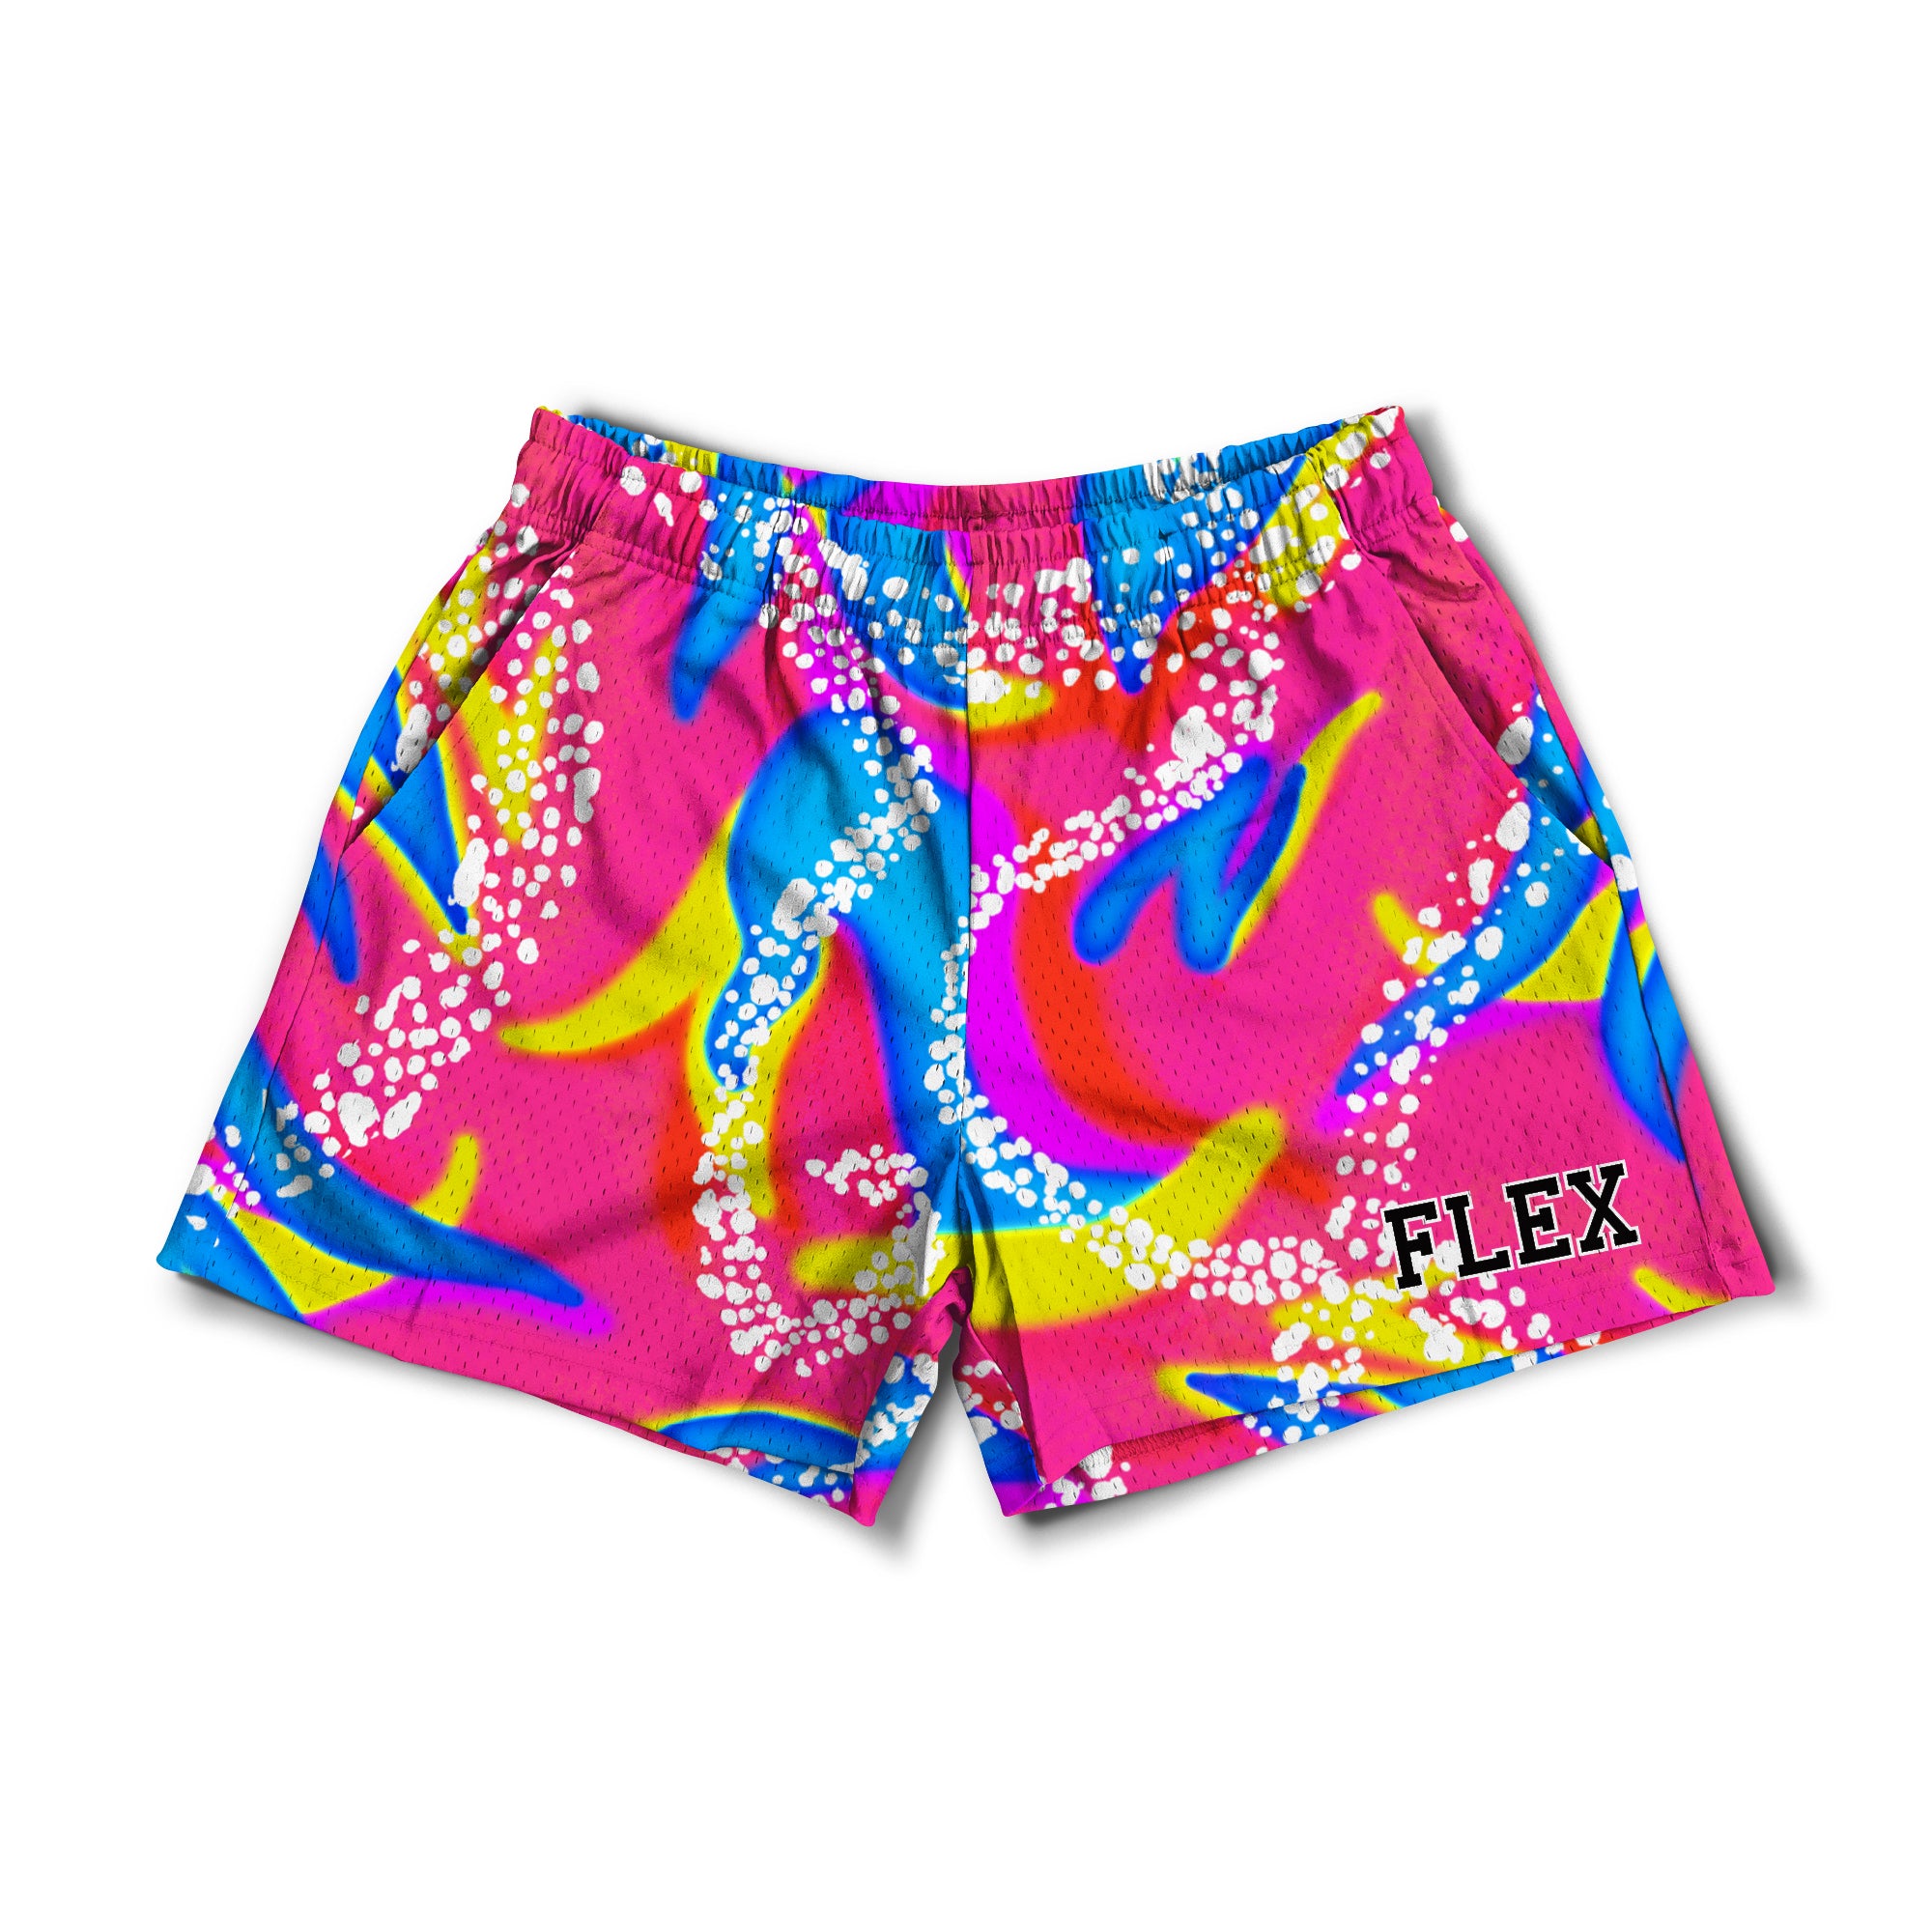 mesh-flex-shorts-5-retro-neon-preorder